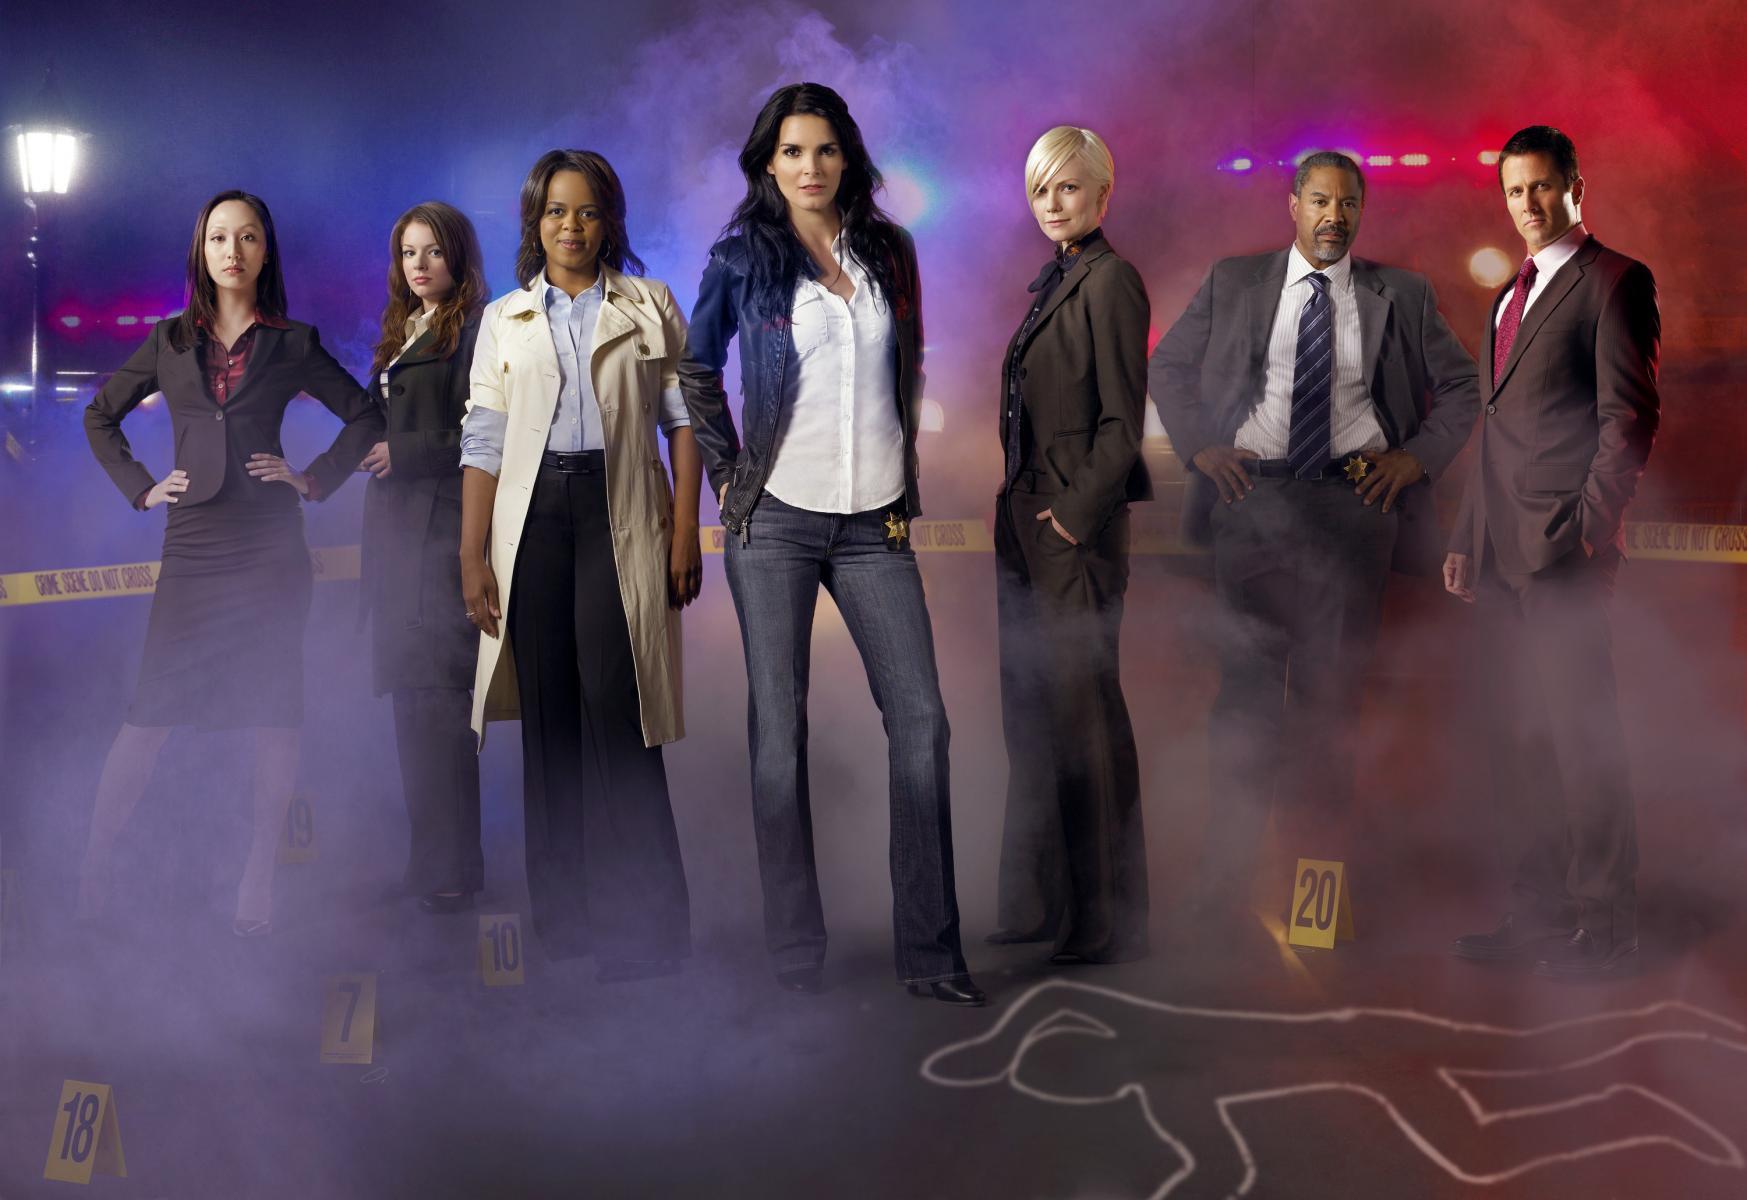 womens murder club - cast tvmaze on women's murder club tv series cast